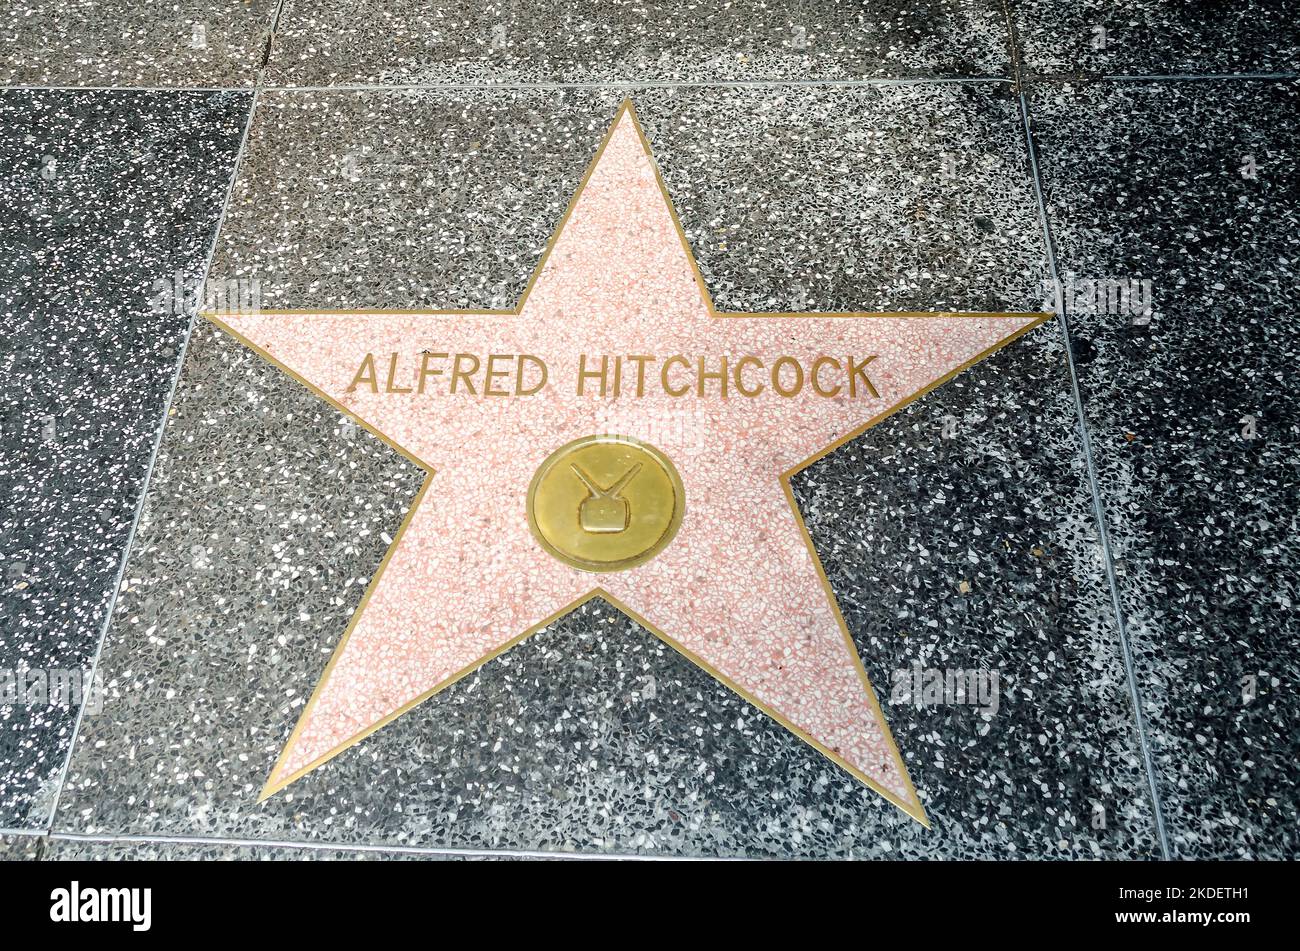 HOLLYWOOD - 26. AUGUST 2012: Alfred Hitchcocks Star auf dem Hollywood Walk of Fame, gesehen am 26. August 2012 in Hollywood in Kalifornien. Dieser Stern ist lo Stockfoto